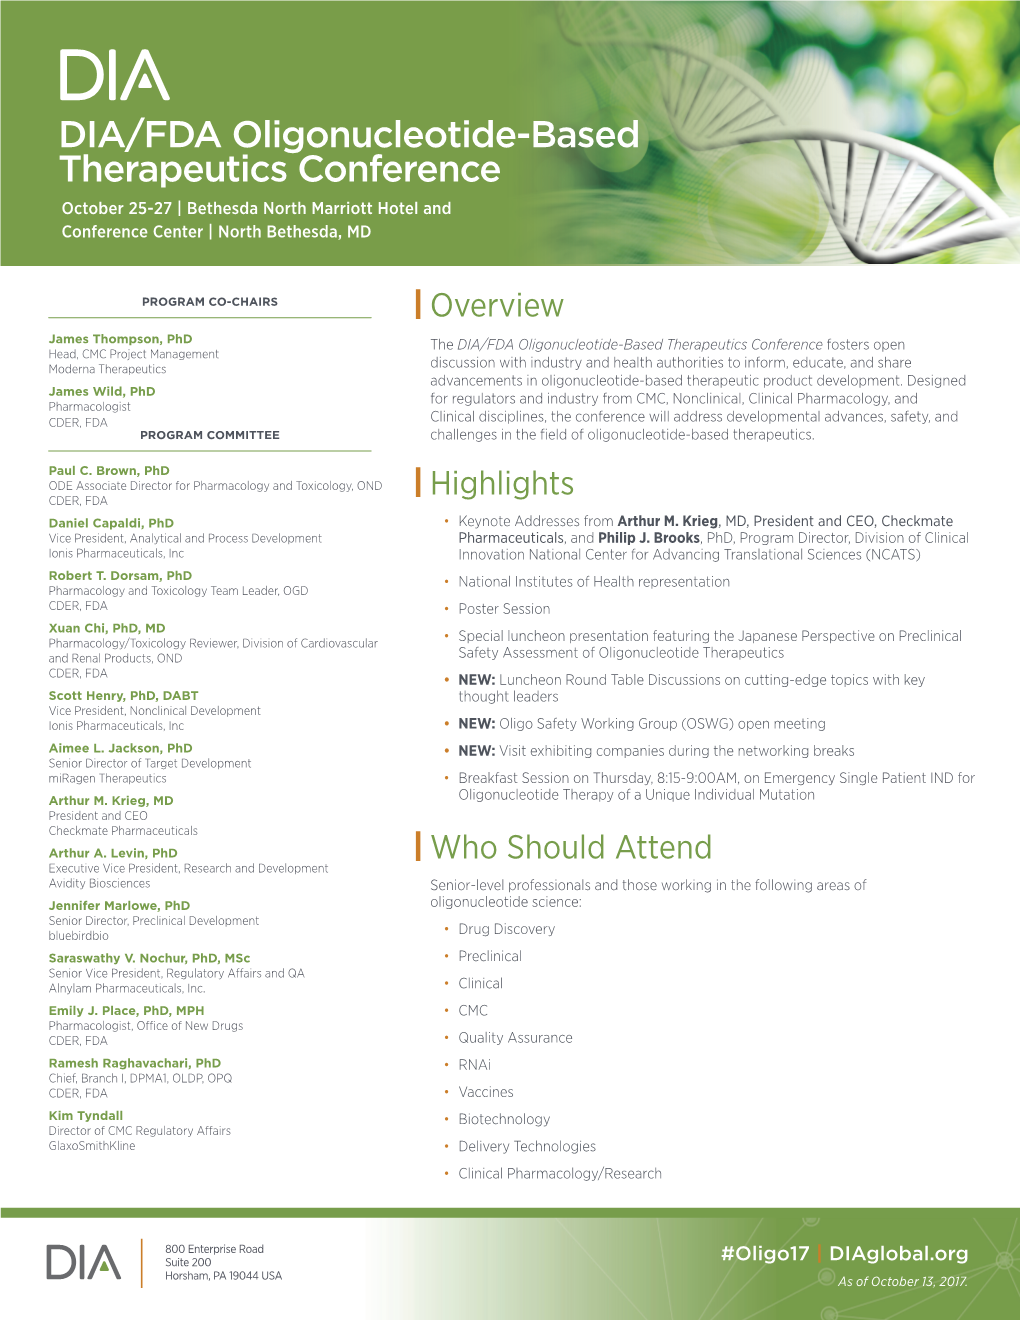 DIA/FDA Oligonucleotide-Based Therapeutics Conference October 25-27 | Bethesda North Marriott Hotel and Conference Center | North Bethesda, MD